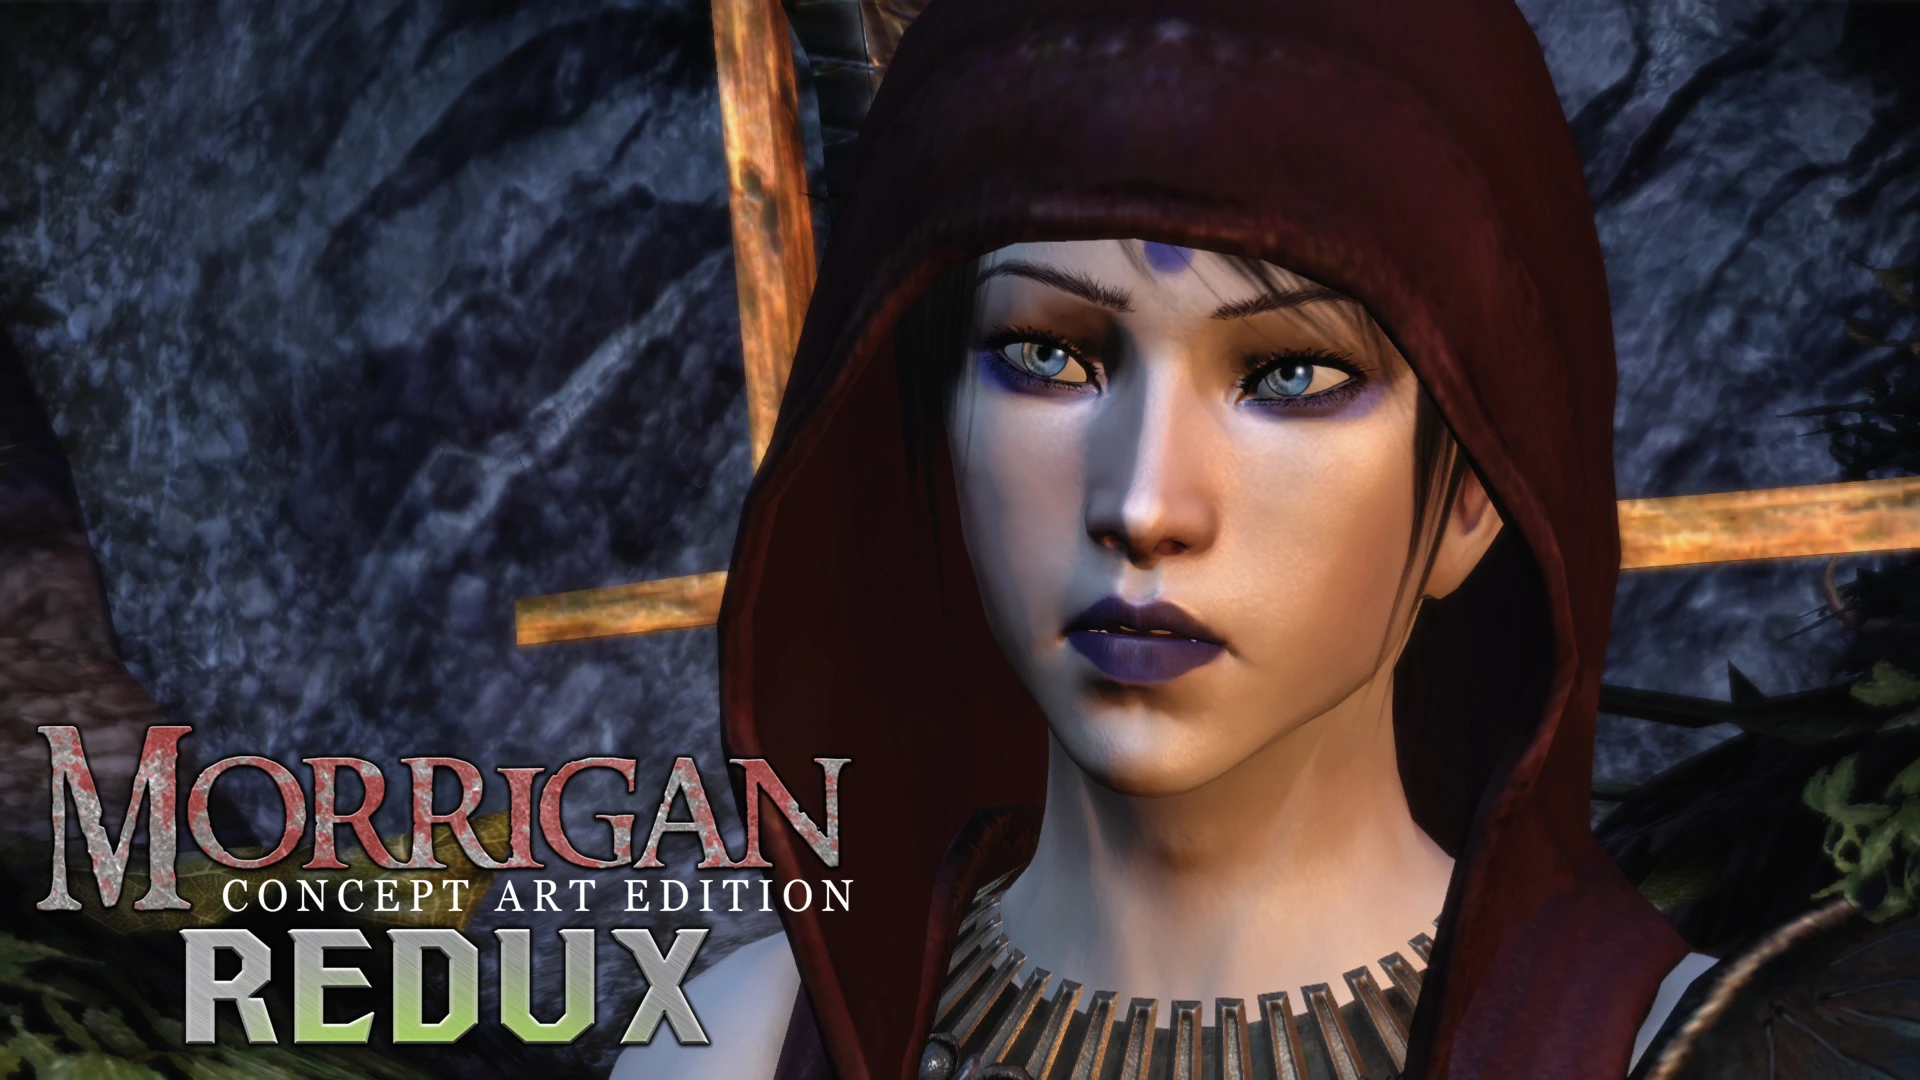 Morrigan Concept Art Edition Redux at Dragon Age: Origins mods. 